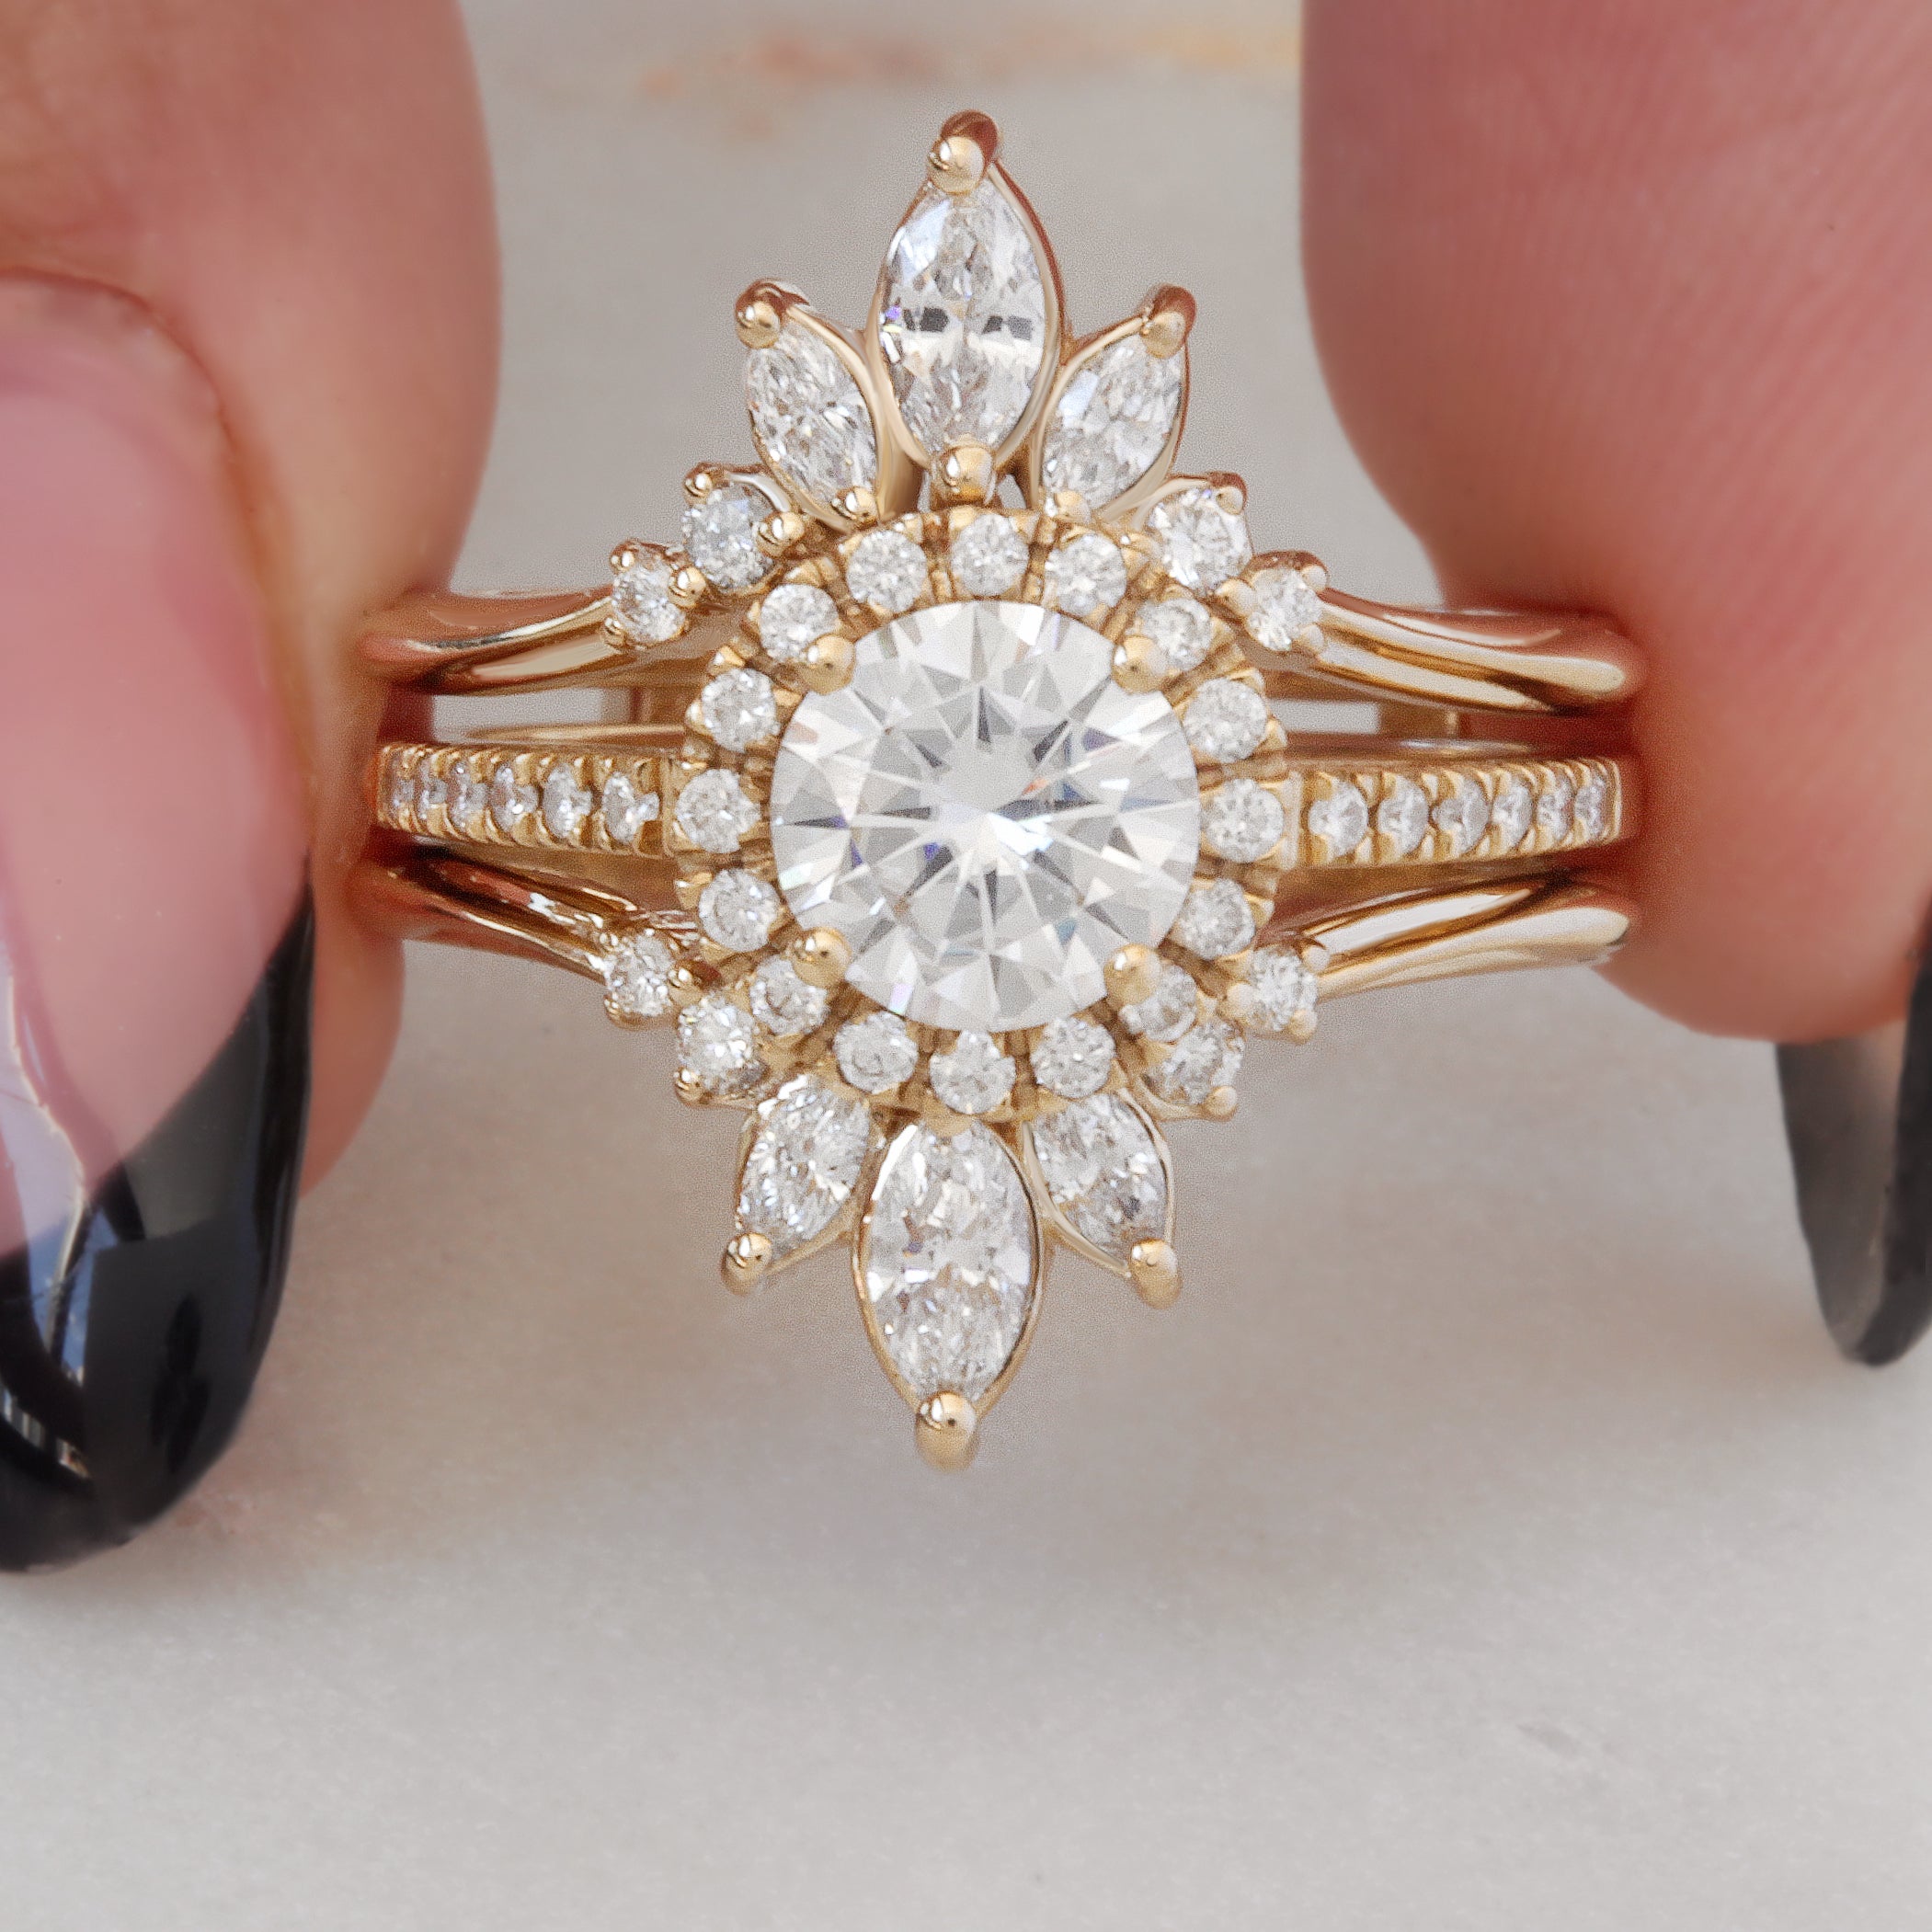 Round Diamond Halo Engagement Ring Lady & Diamond Ring Guard Enhancer Danielle - Bridal Two Ring Set Lab Diamond